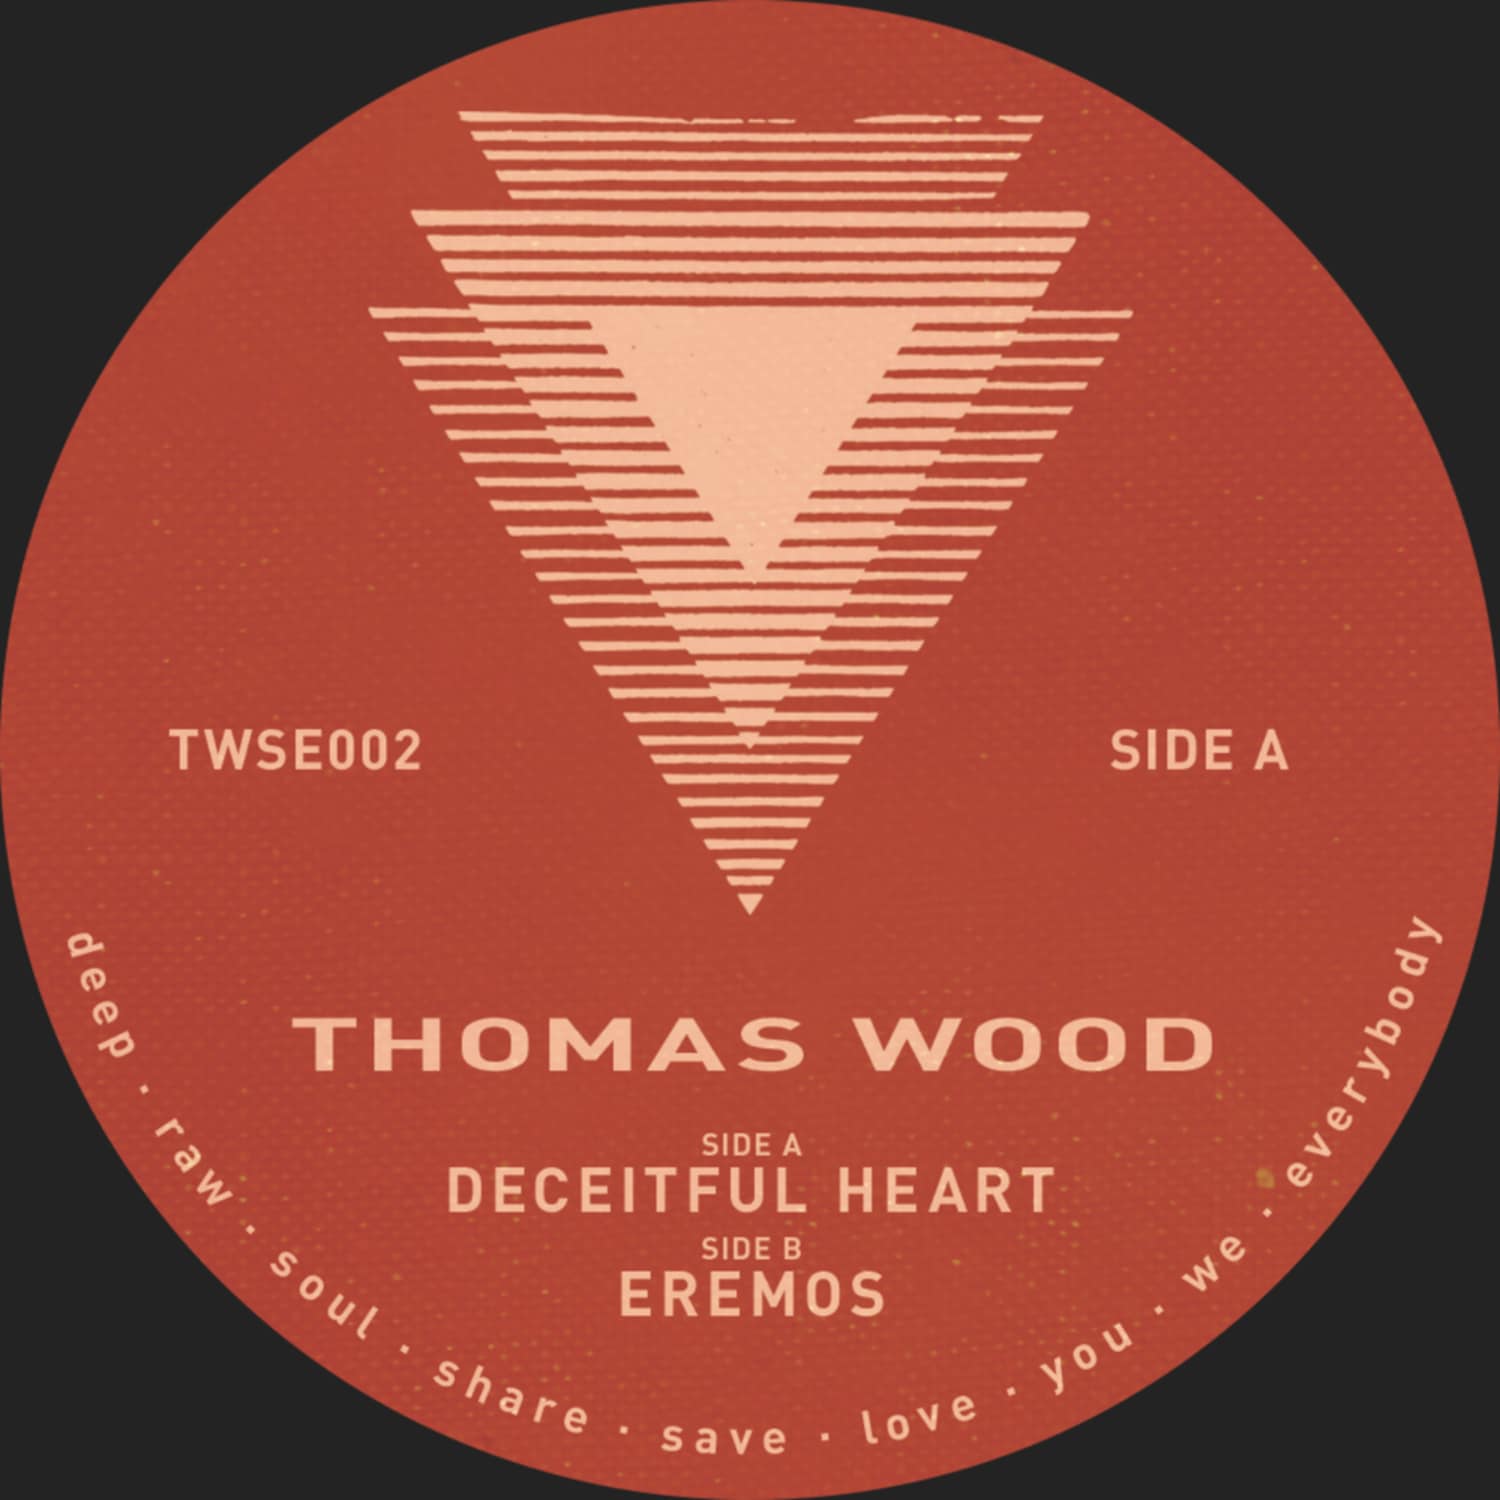 Thomas Wood - DECEITFUL HEART 